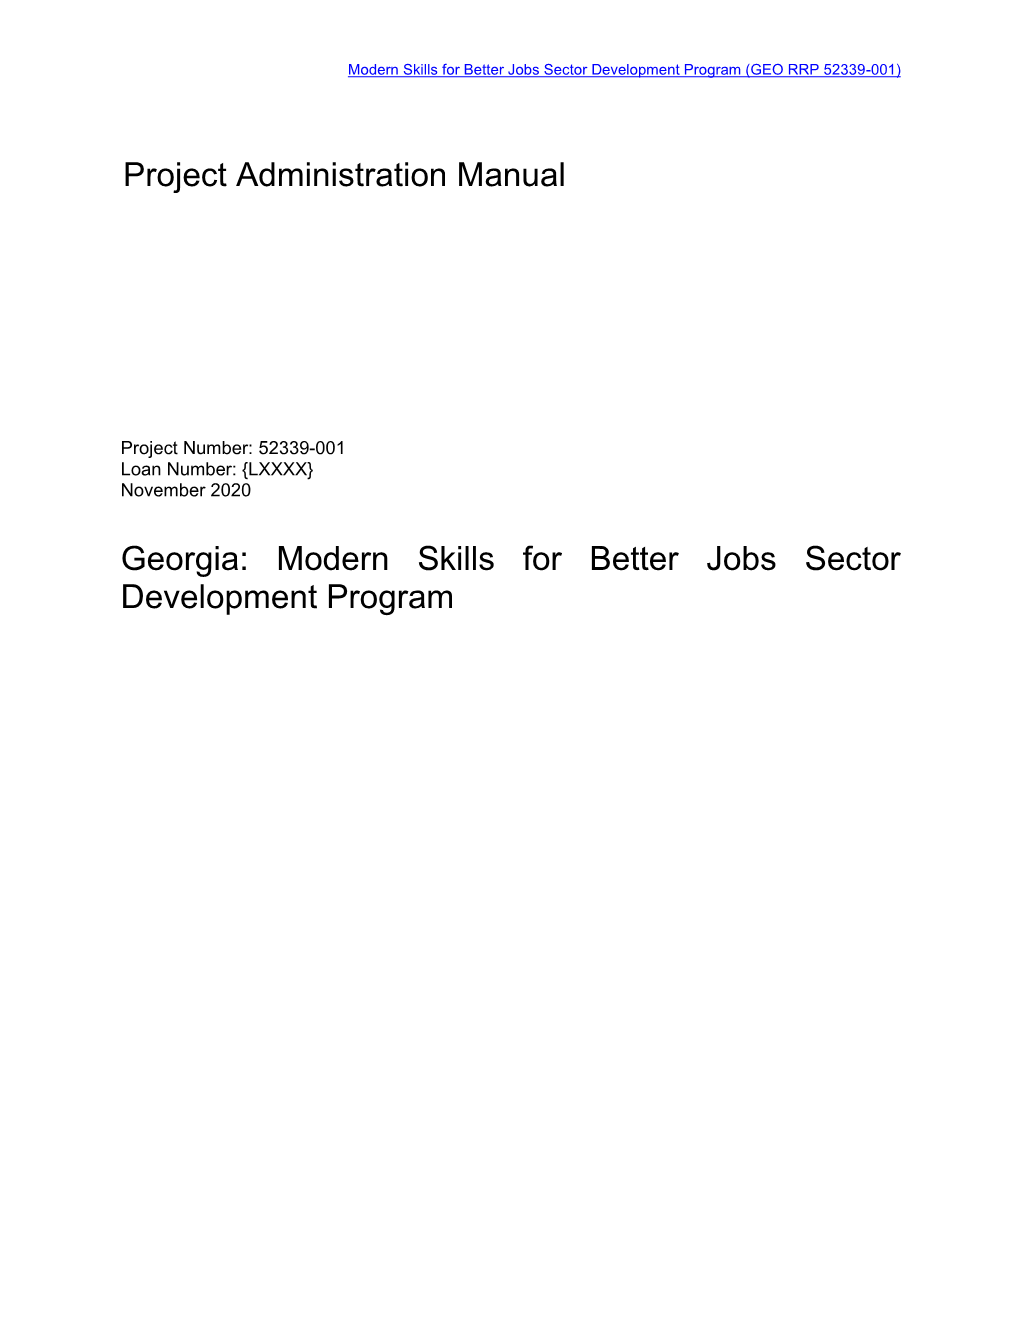 Modern Skills for Better Jobs Sector Development Program Project